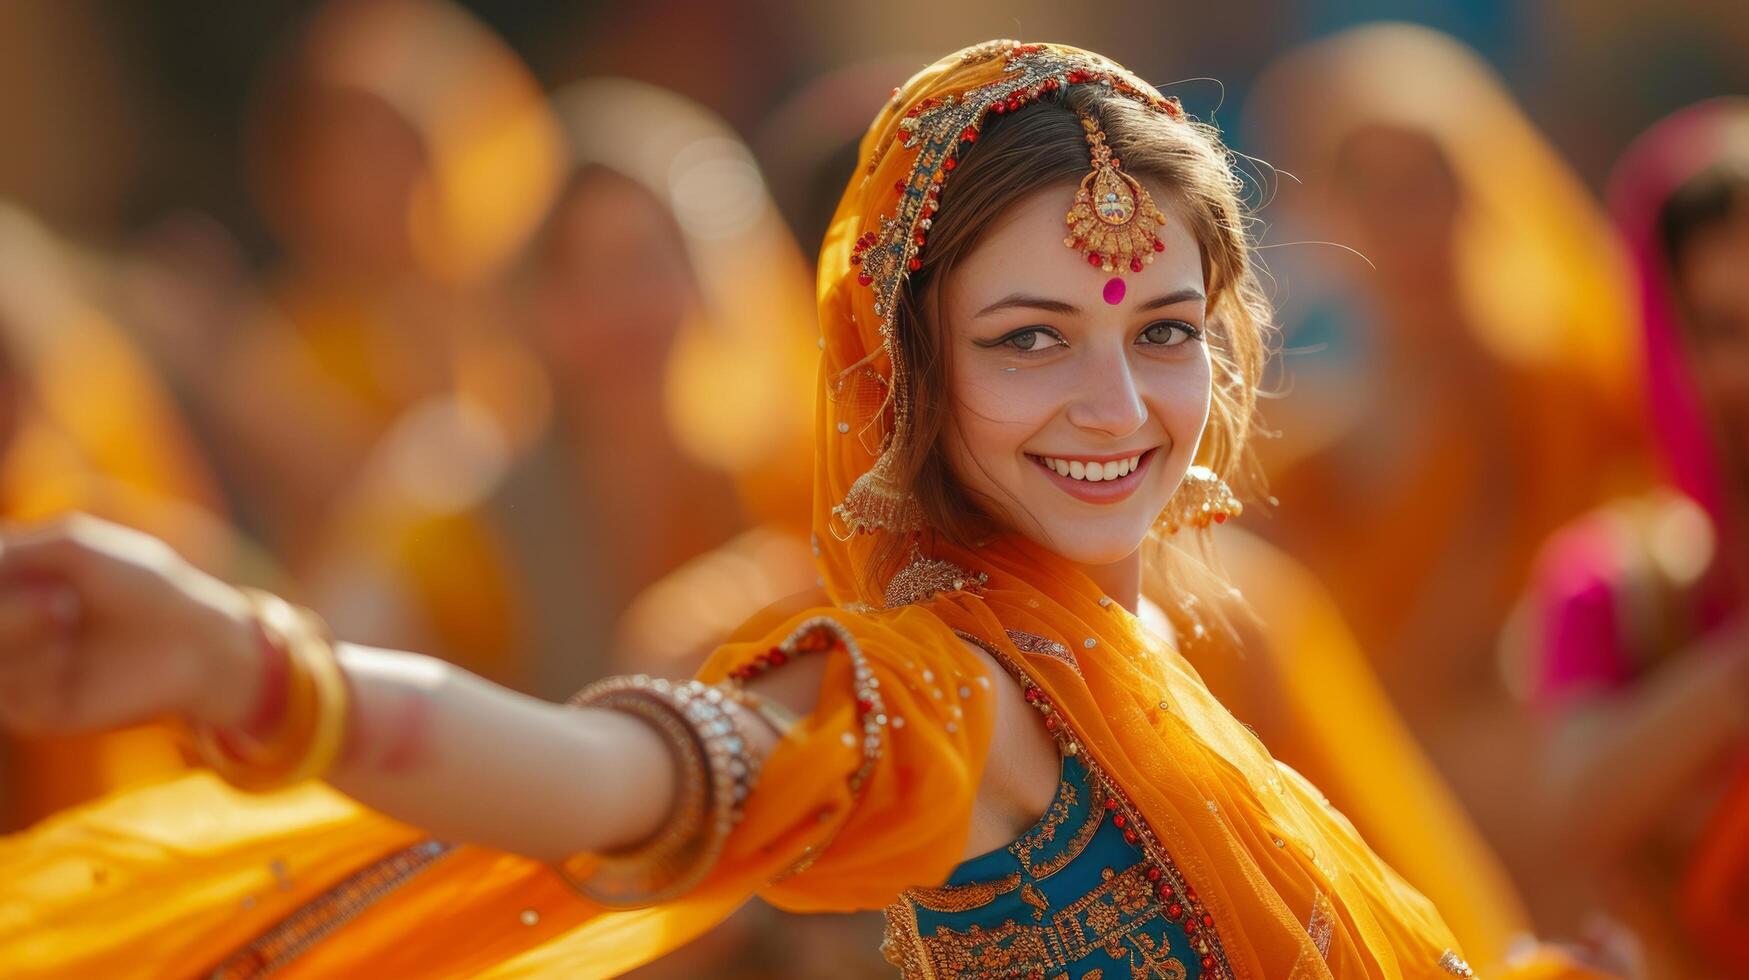 ai generado dinámica fotografias de bailarines ejecutando energético y animado tradicional indio bailes durante holi celebraciones foto